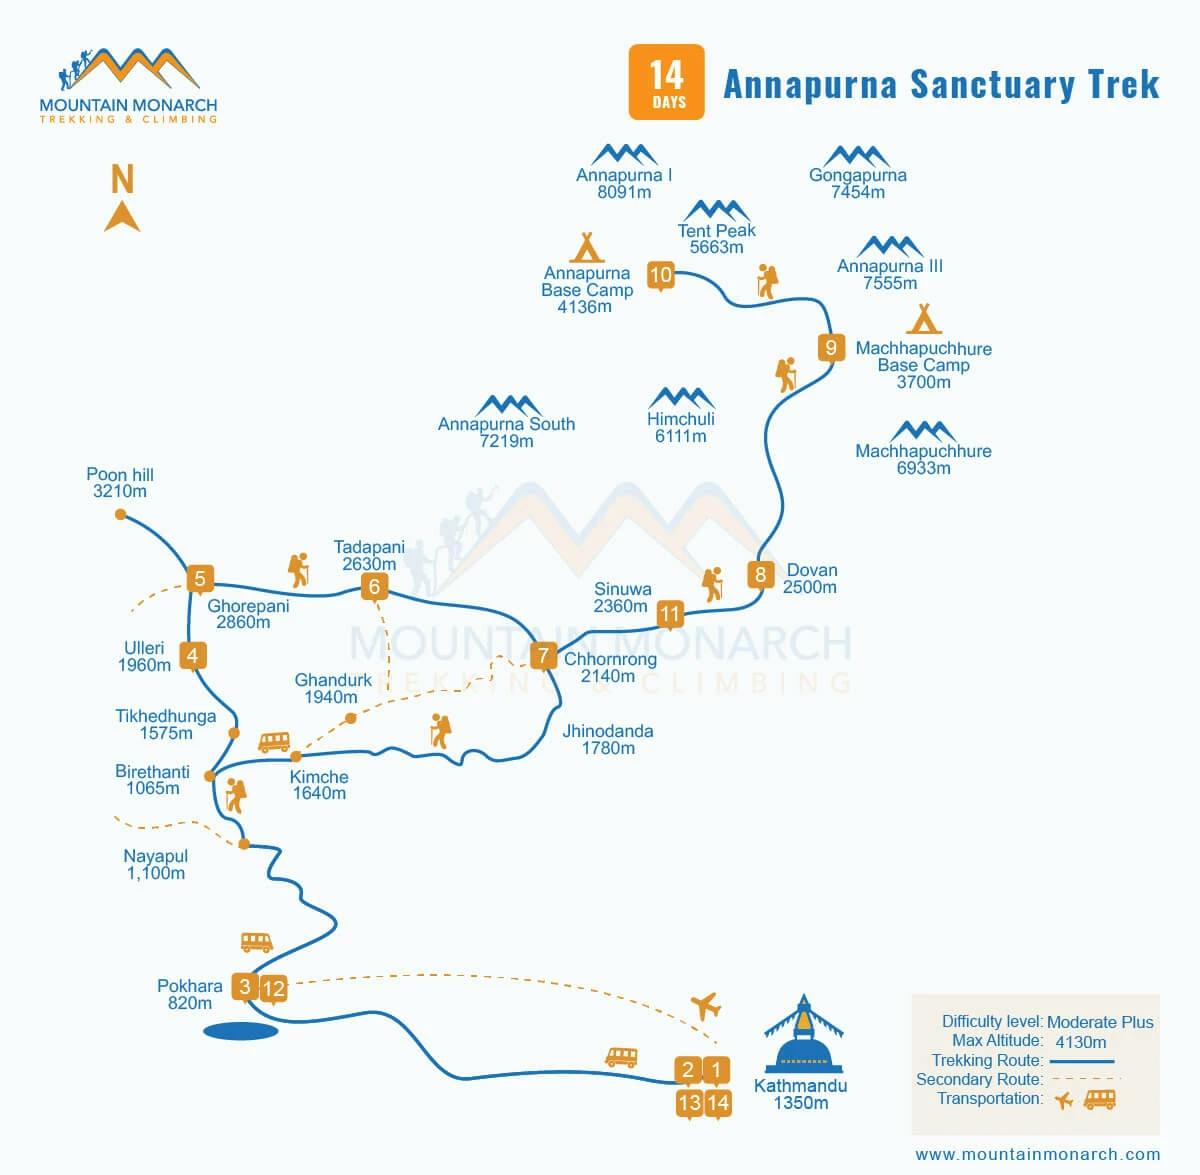 Trek Map of Annapurna Sanctuary